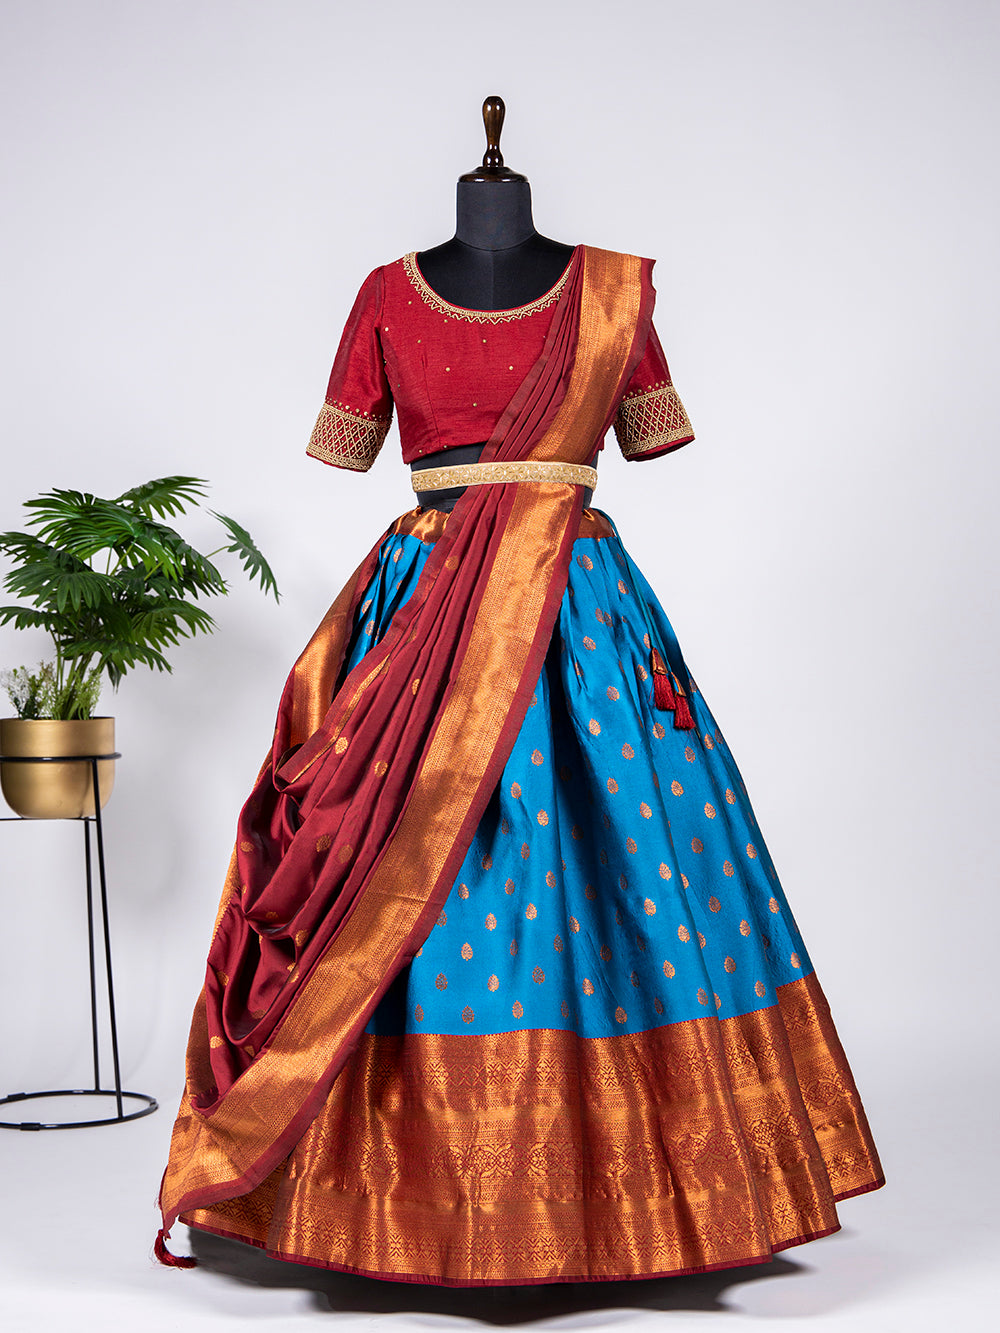 How to wear banarasi saree in lehenga style - Baggout